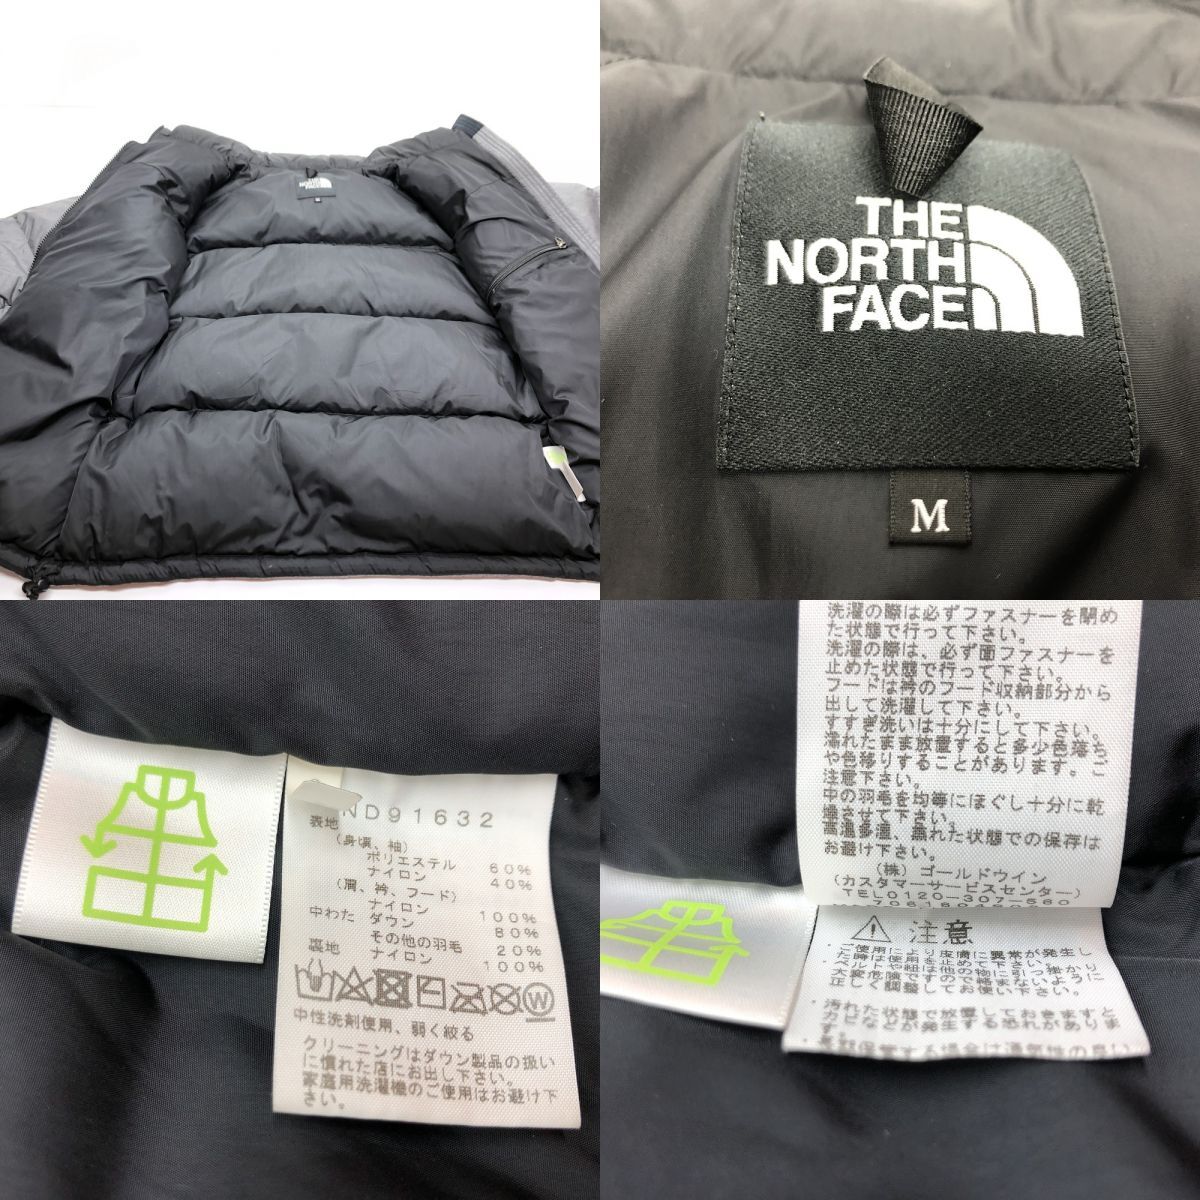 tu131s THE NORTH FACE  North Face  ... пиджак  ... ND91632  мужской    серый  M размер   ※ подержанный товар  【... магазин  】